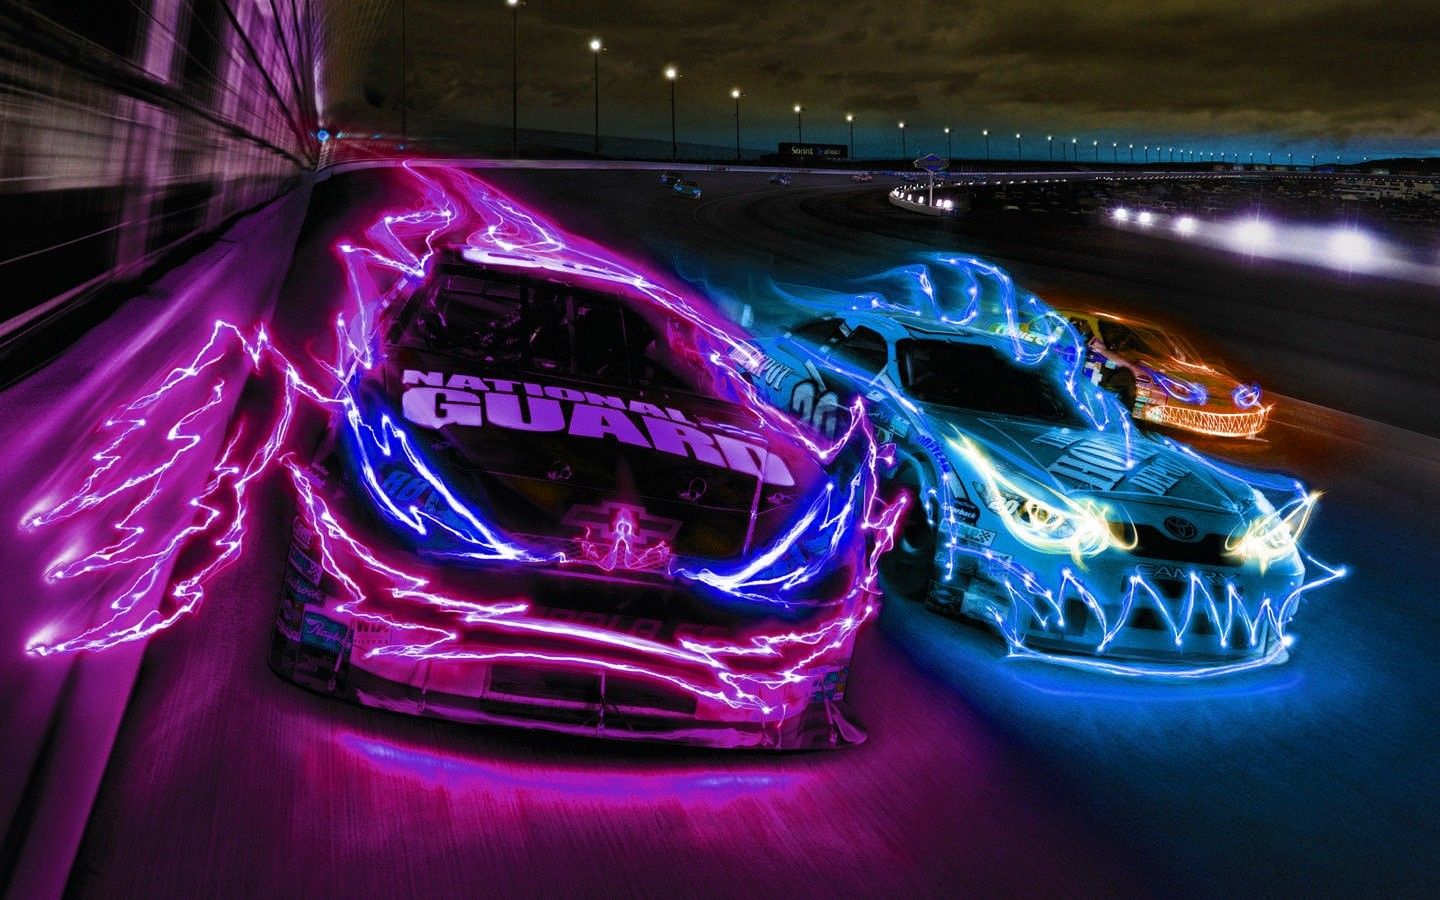 Cool Cars Wallpaper. Car wallpaper, Neon car, Cars music